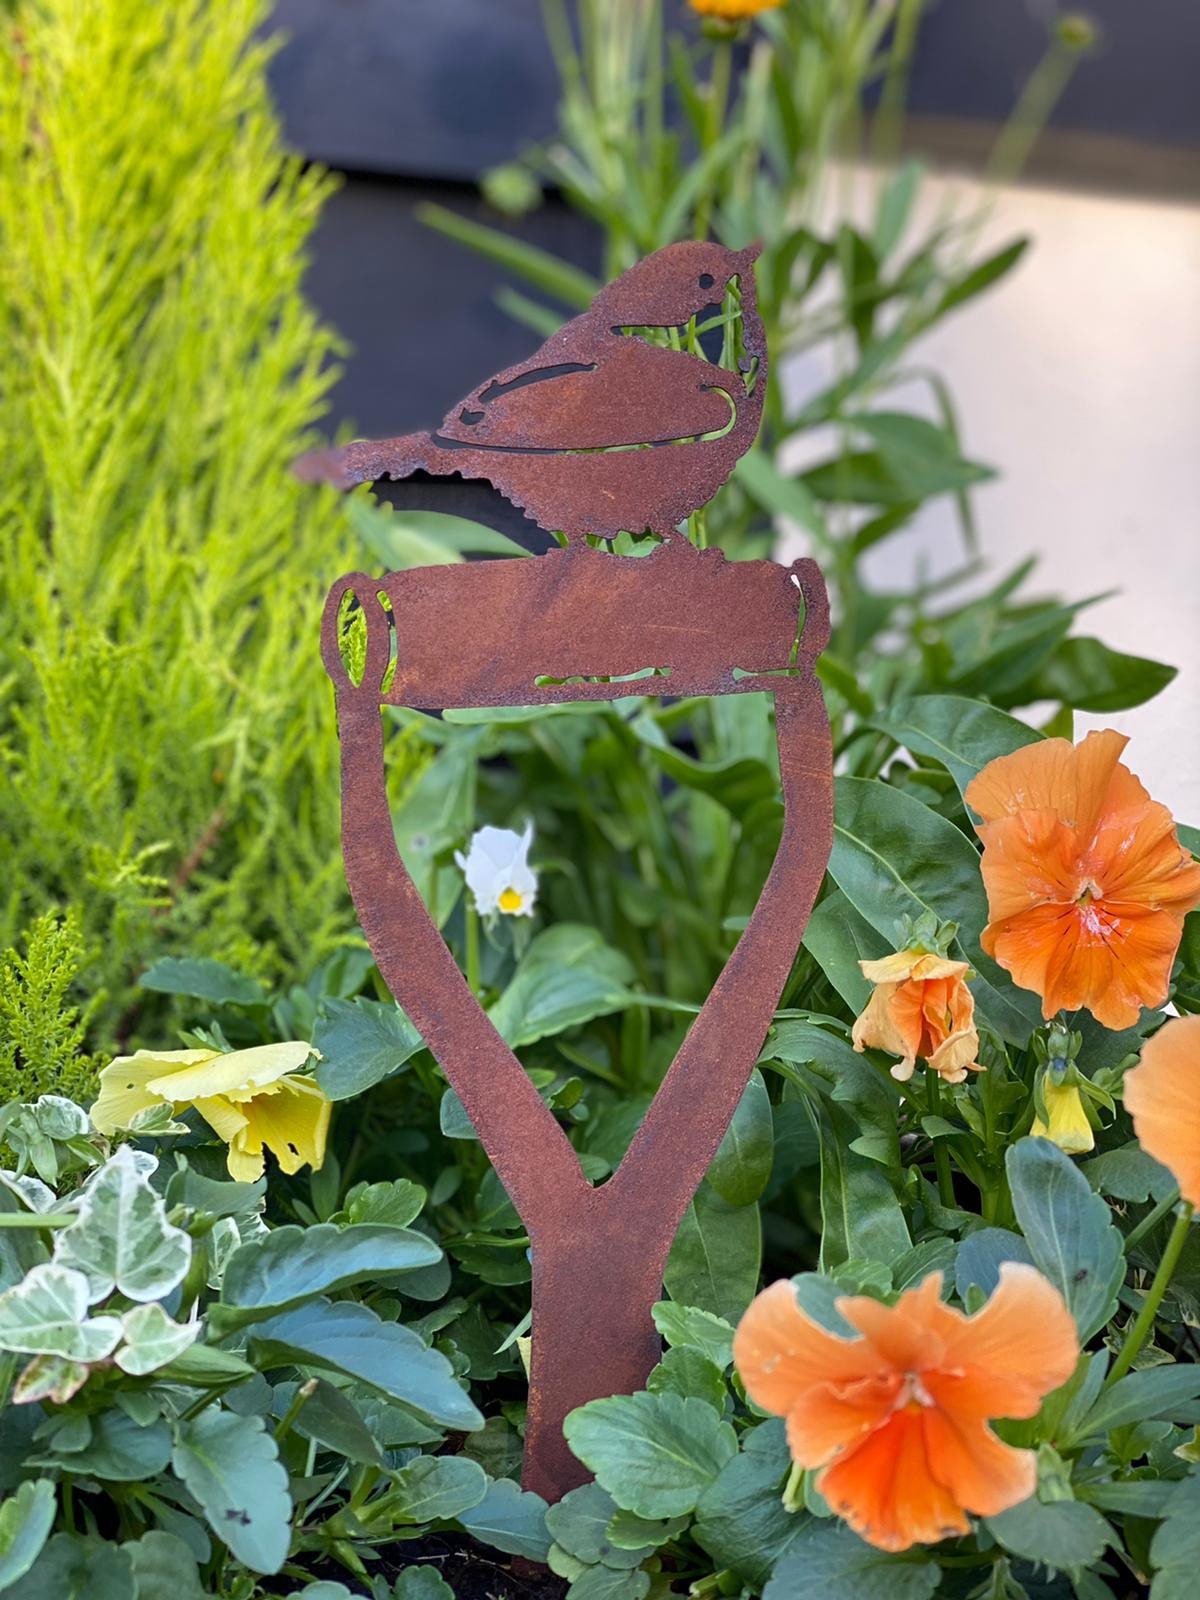 Robin on a spade garden decoration